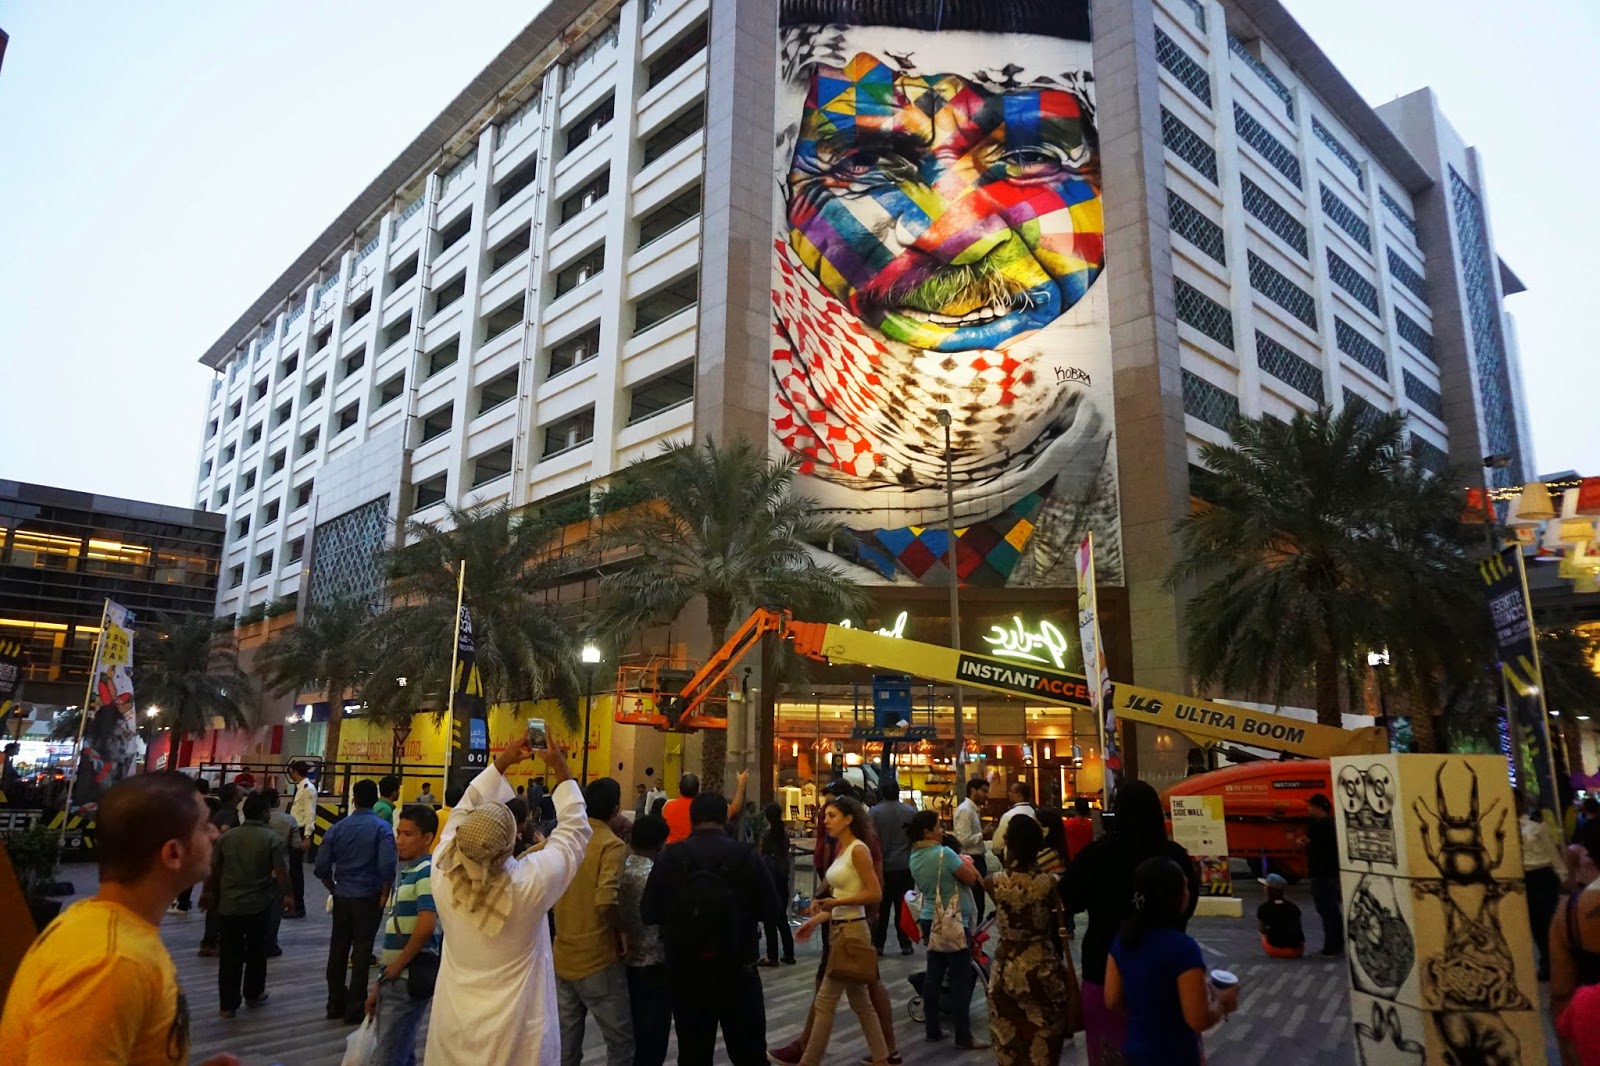 Kobra paints “The Bedouin”, its latest piece in Dubai, UAE (7)